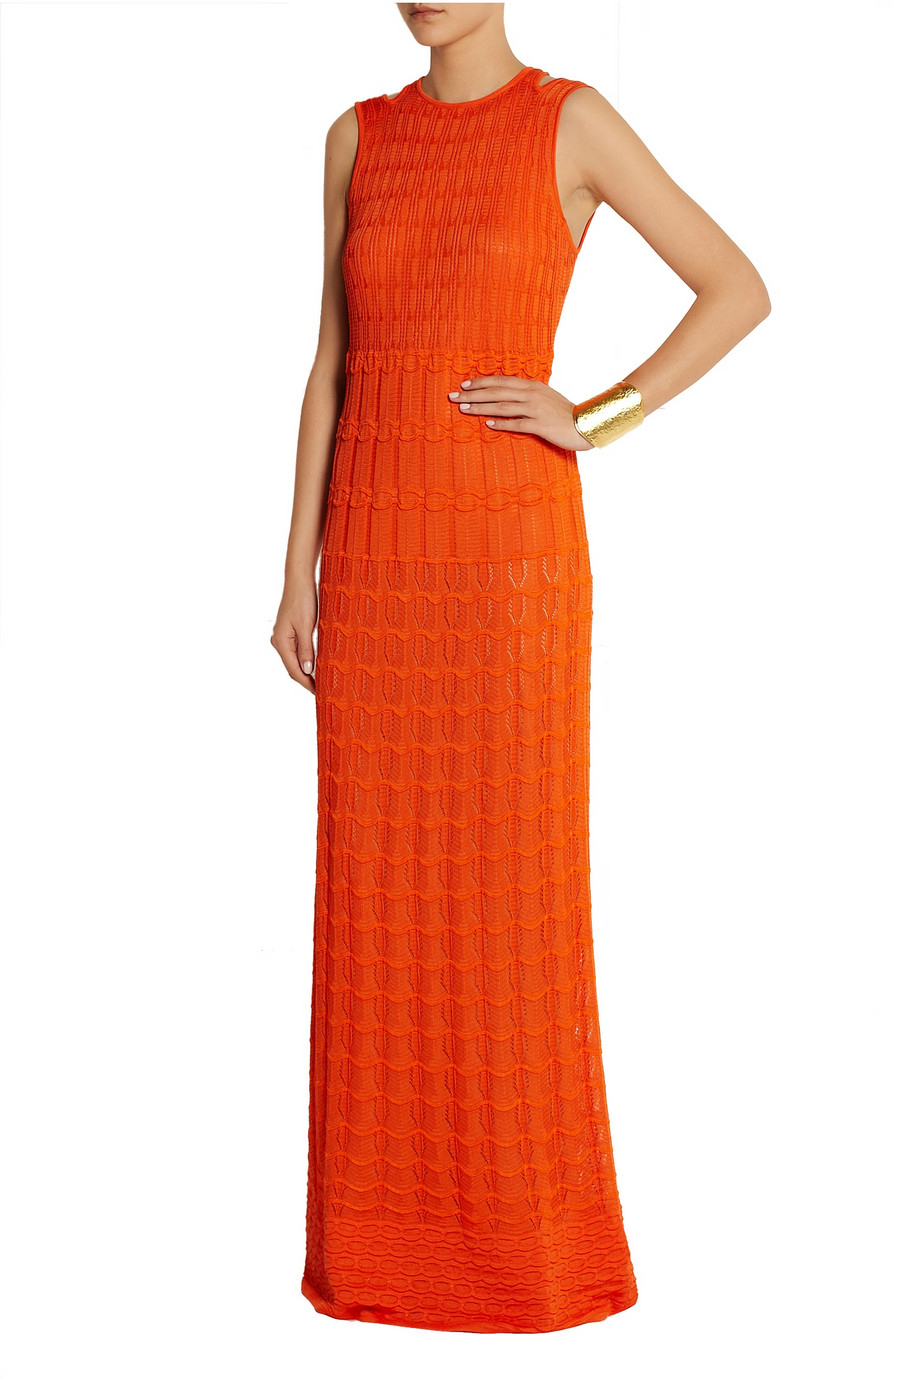 M Missoni Crochet-Knit Cotton-Blend Maxi Dress in Orange - Lyst